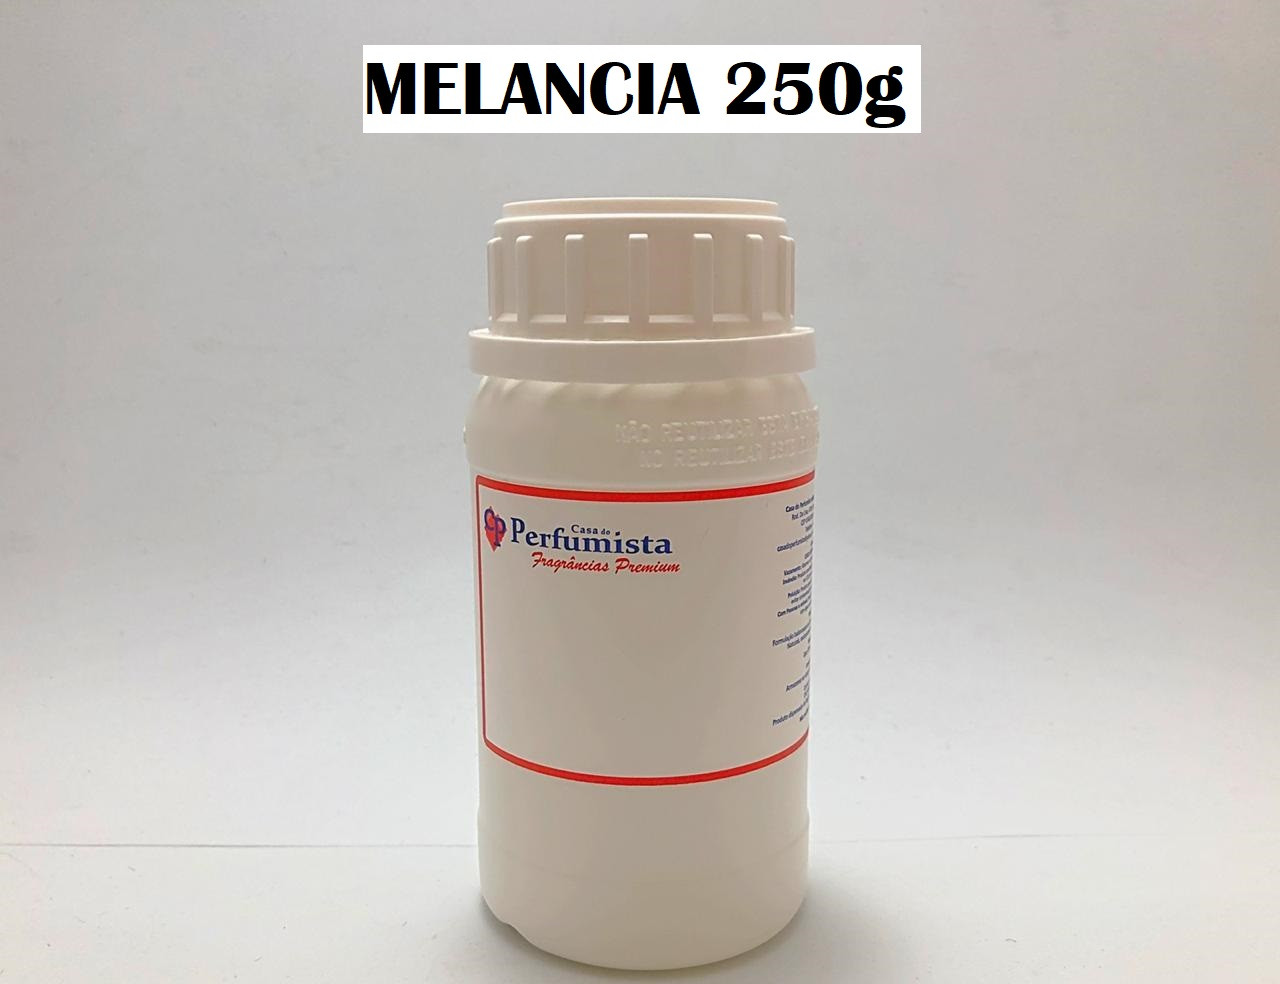 MELANCIA - 250g